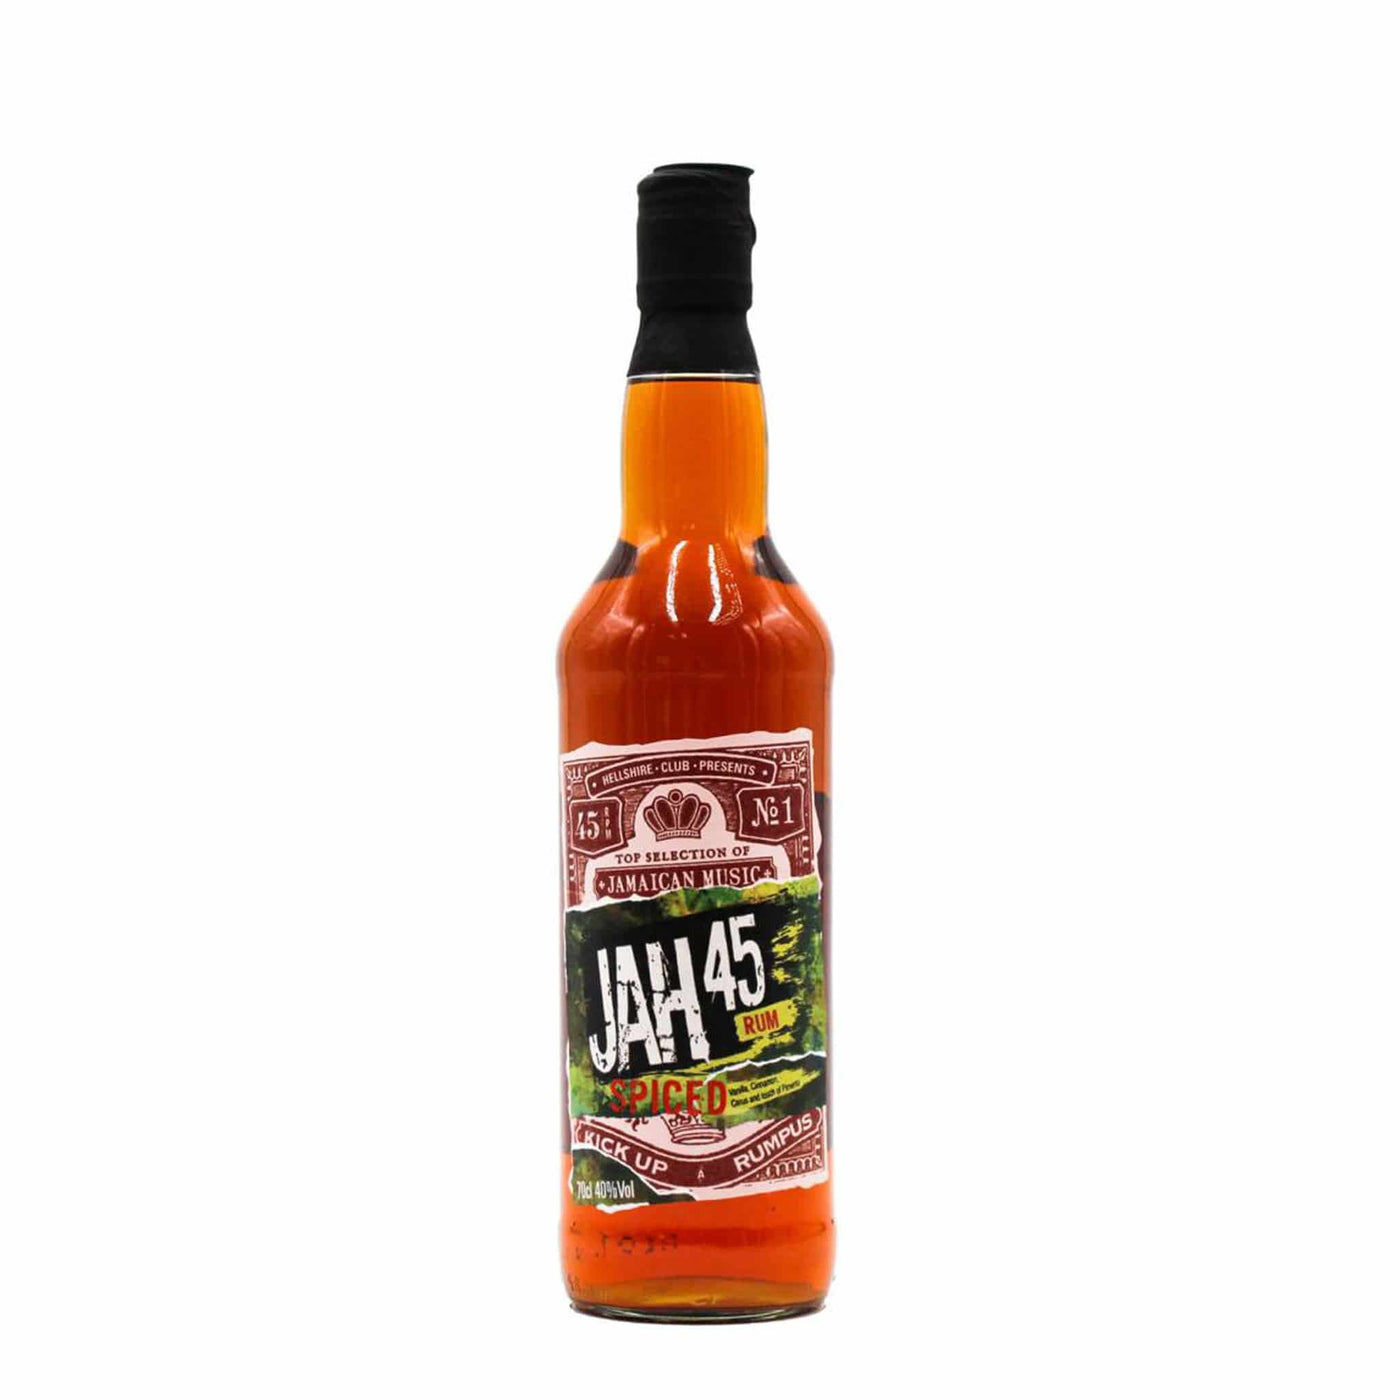 JAH45 Spiced Rum - Spiritly